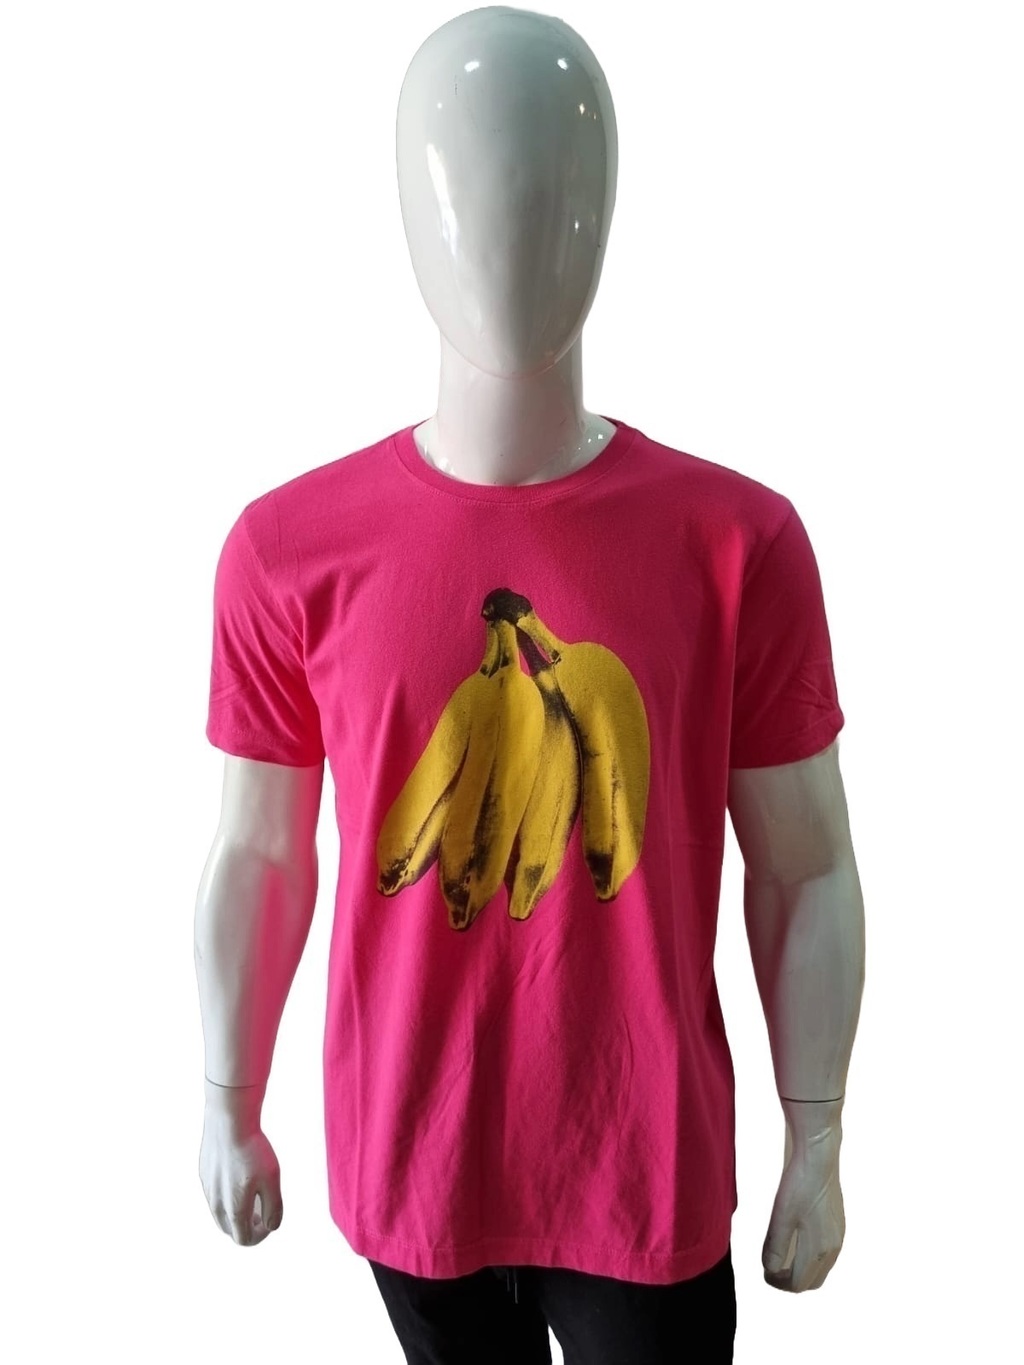 Camiseta Banana Pop - Osklen - Zona Sul Boutique